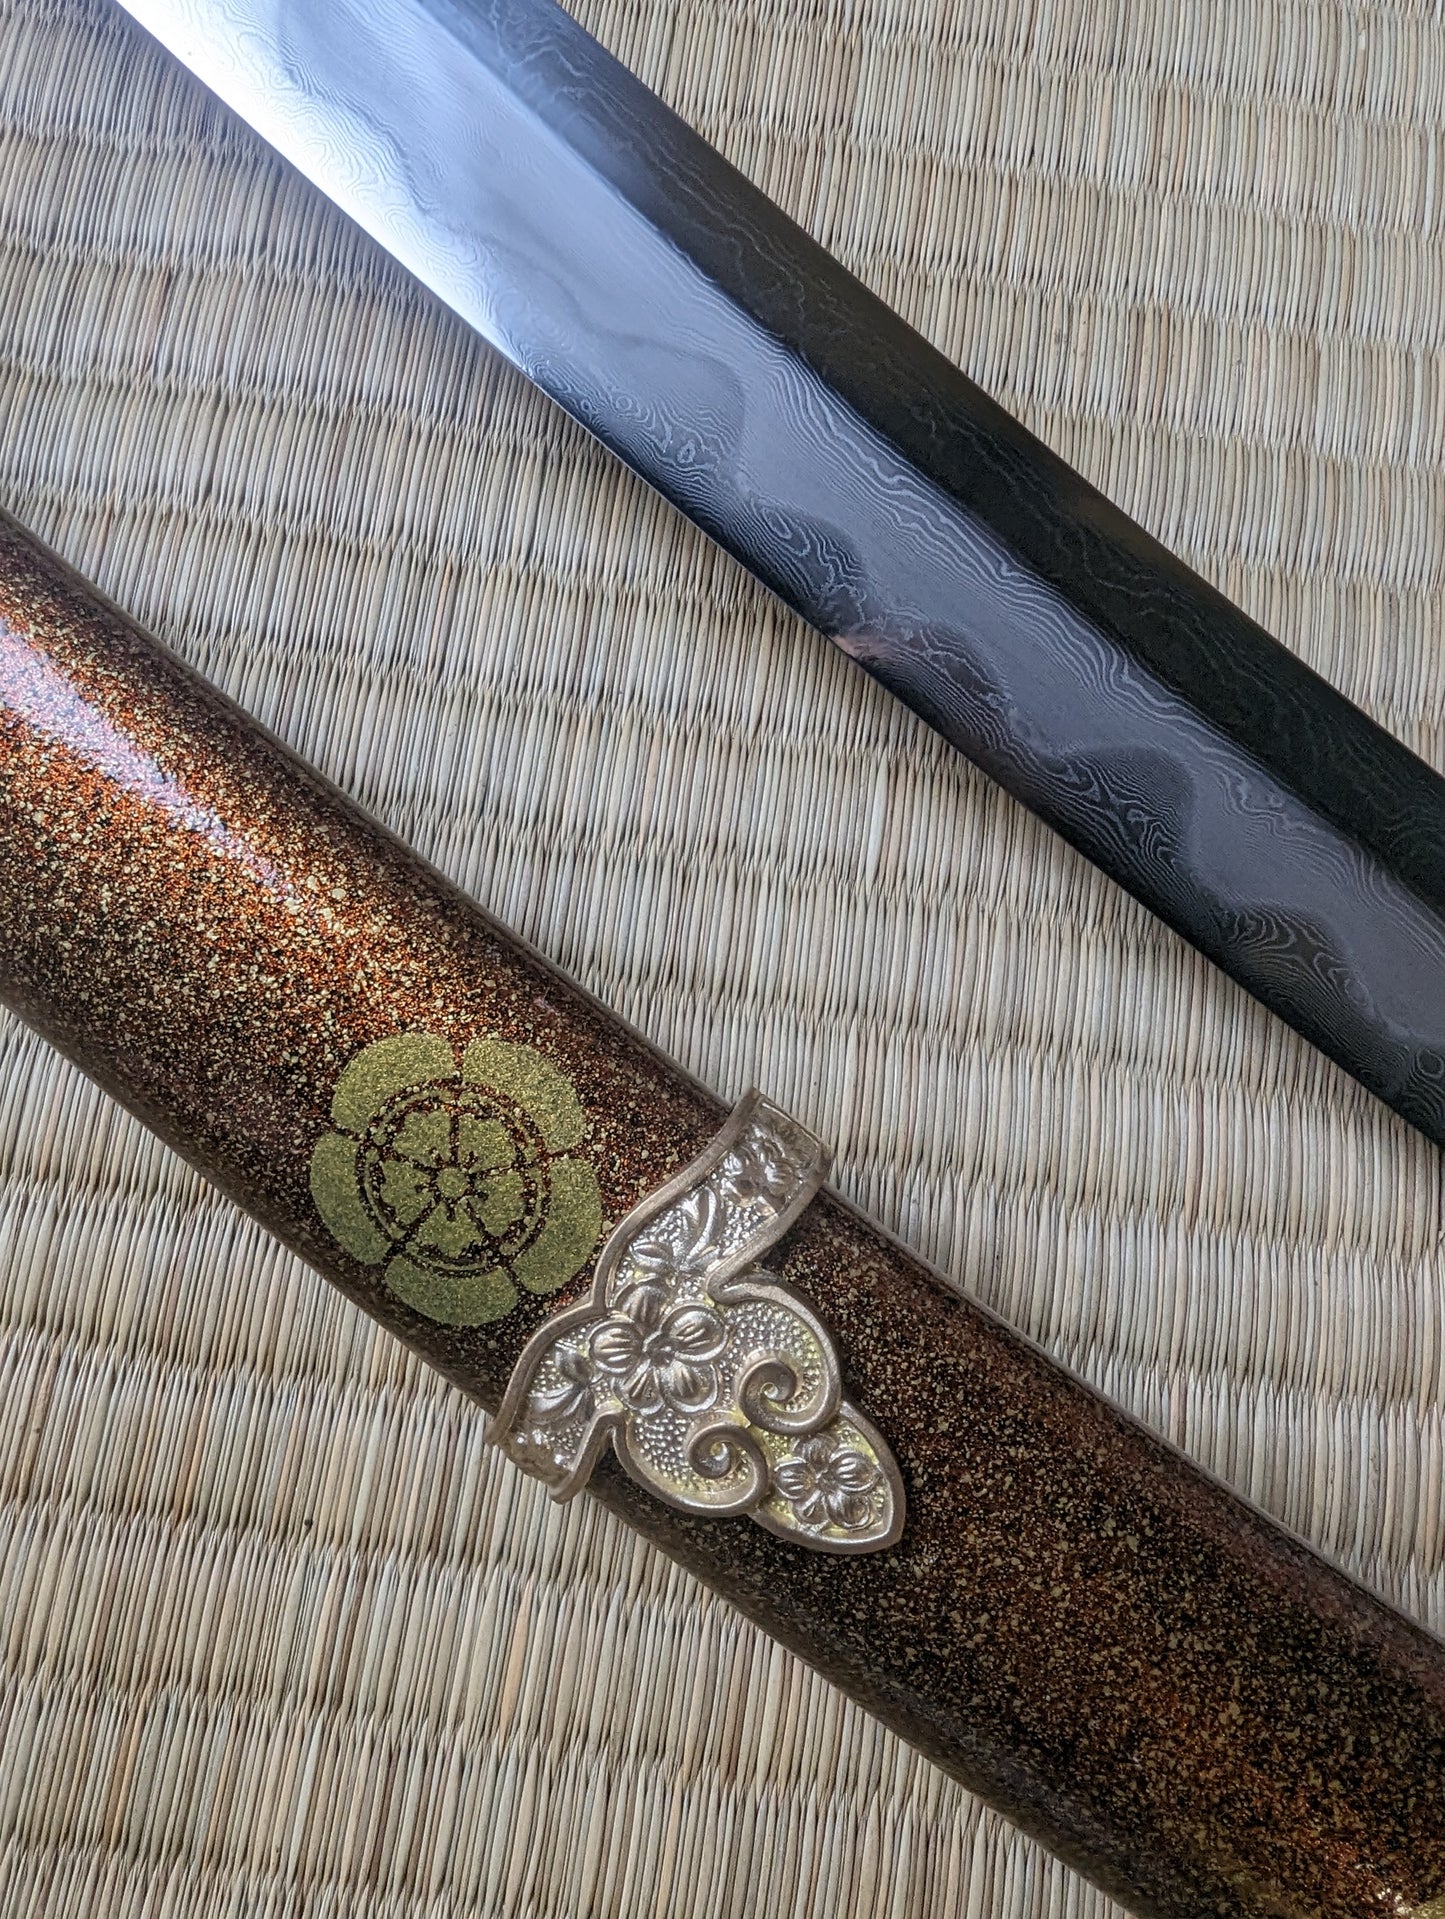 Phoenix Arms Tachi - Toyotomi - folded steel, clay tempered, hadori polish